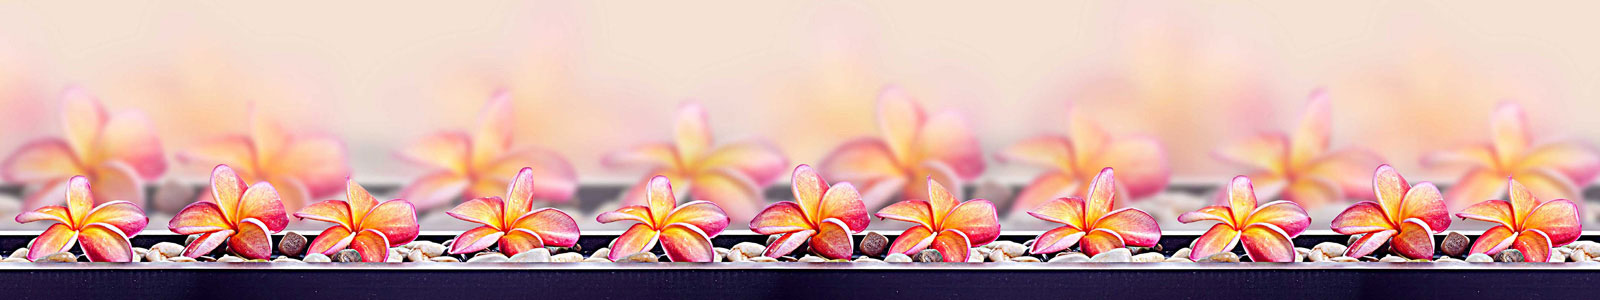 №4293 - Ряд ярких цветов франжипани с камушками